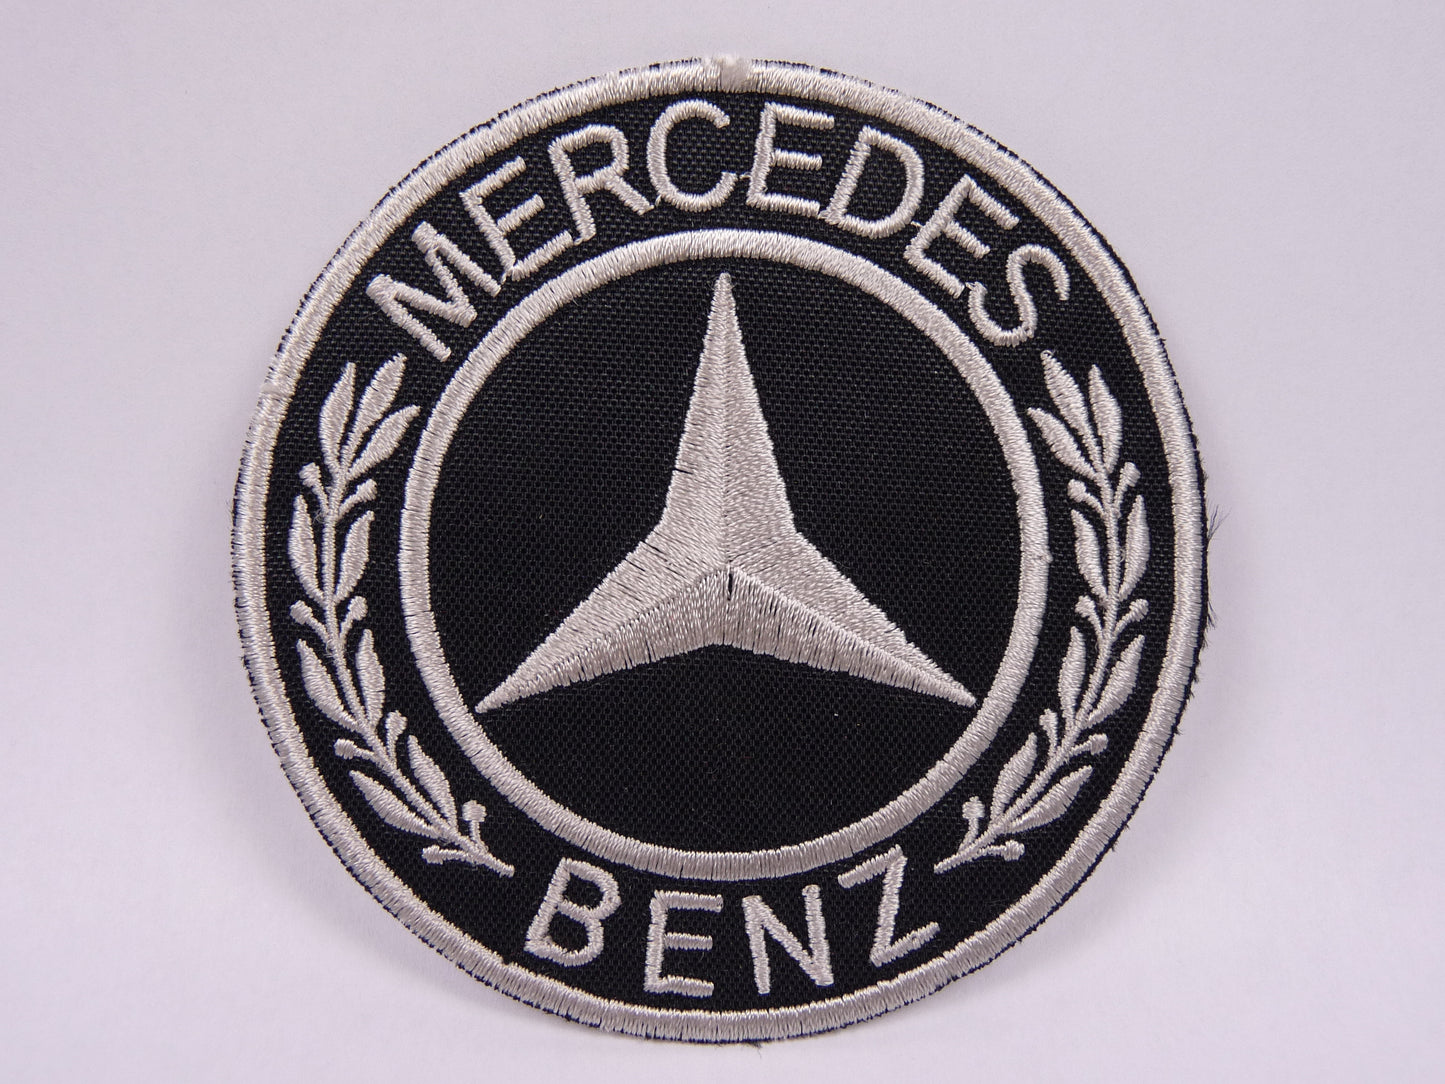 PTC98 Patch brodé thermocollé : logo Mercedes Diamètre environ 9 cm